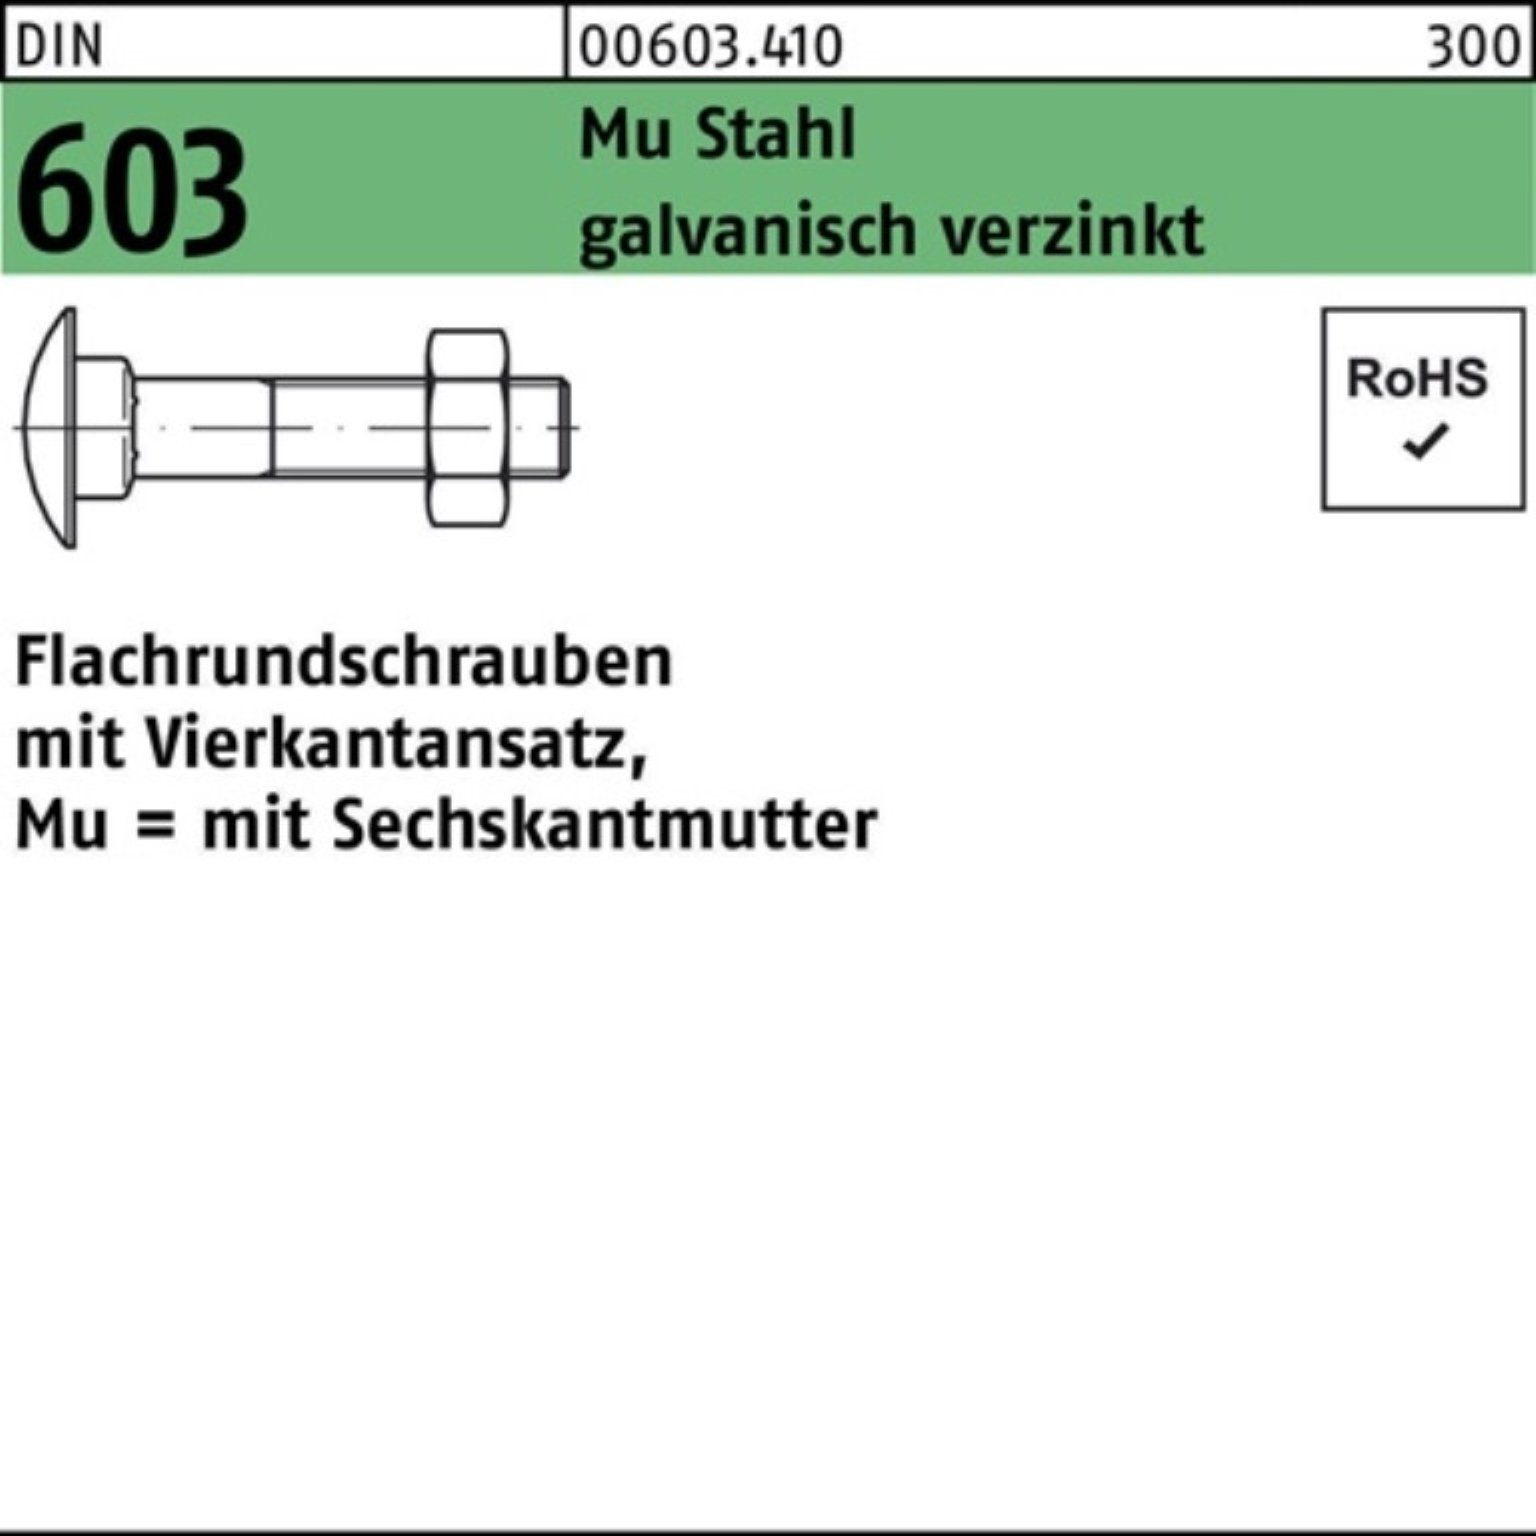 Reyher Schraube 100er Pack Flachrundschraube DIN 603 Vierkantansatz/6-ktmutter M8x100